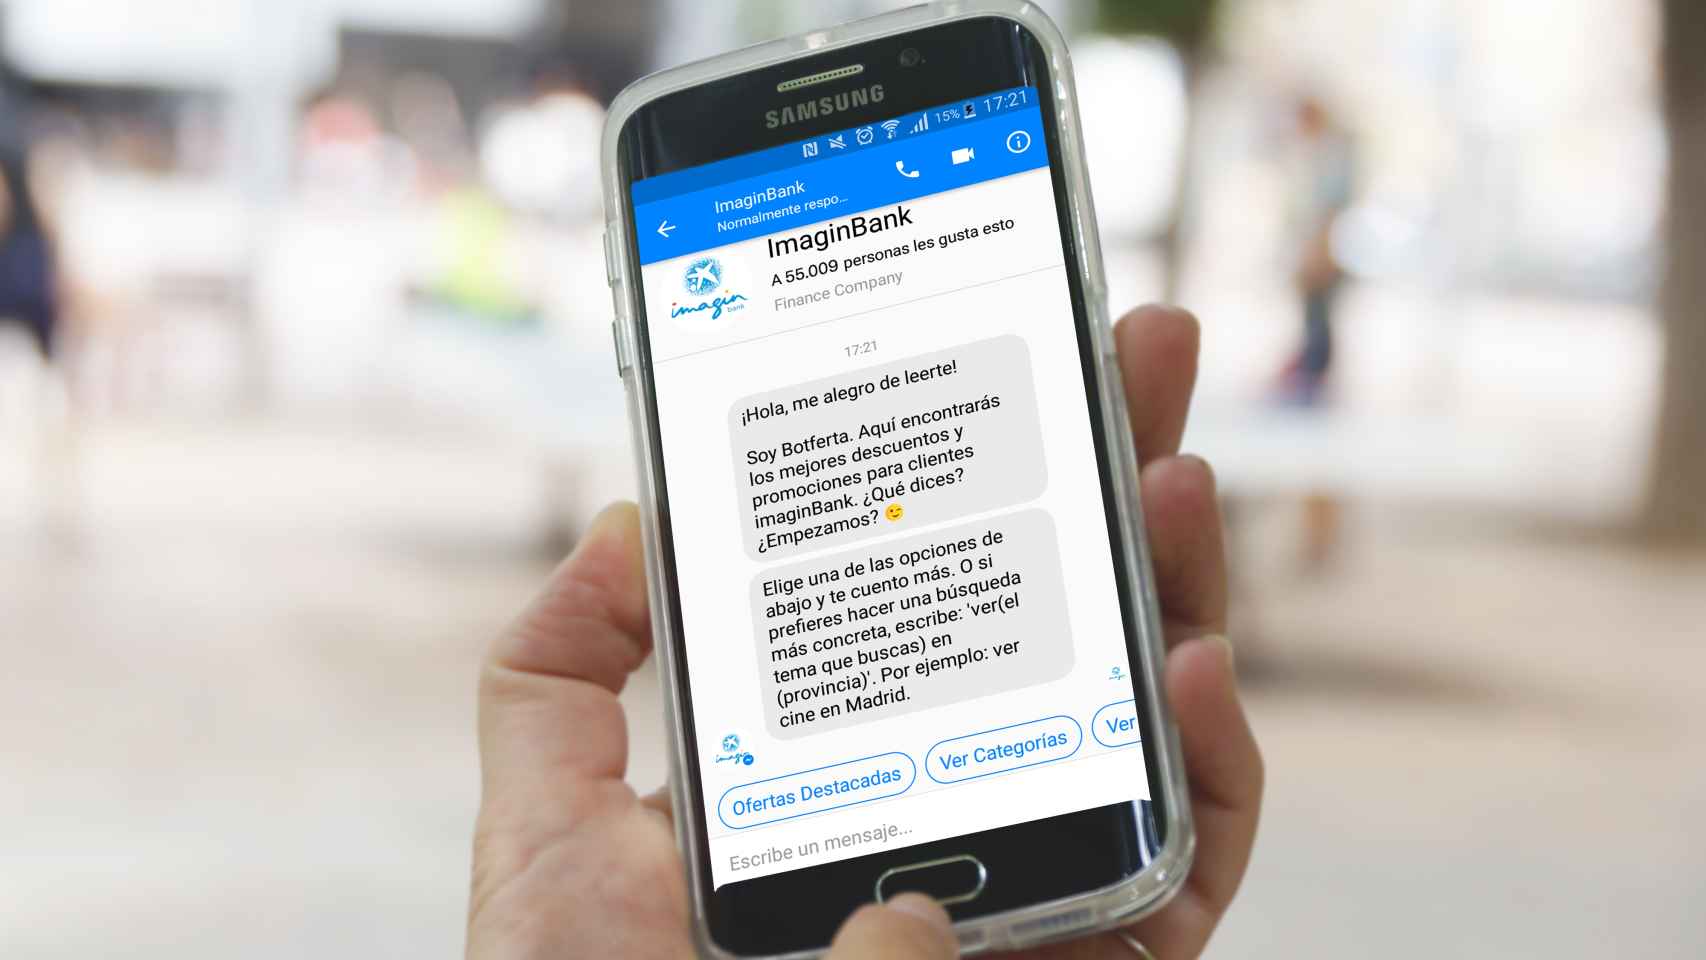 Caixabank lanzó el primer chatbot en España, a través de imaginBank